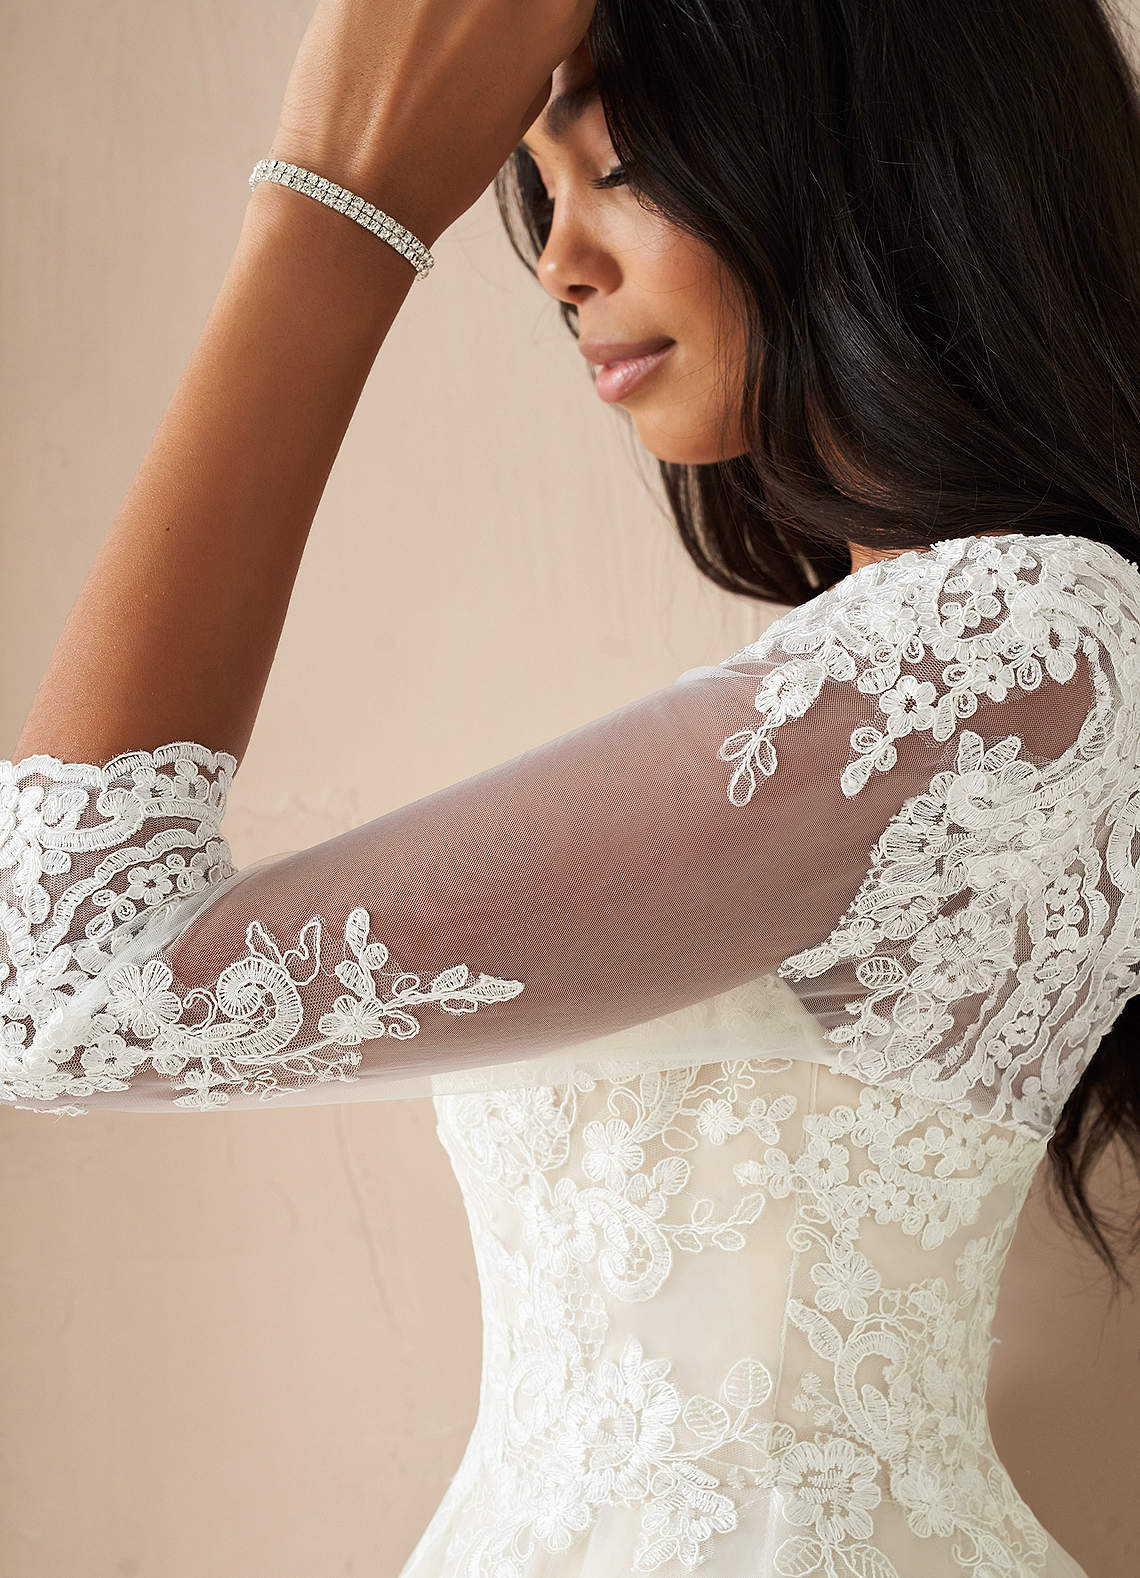 Azazie Sandoval Wedding Dresses A-Line Lace Tulle Sweep Train Dress image1